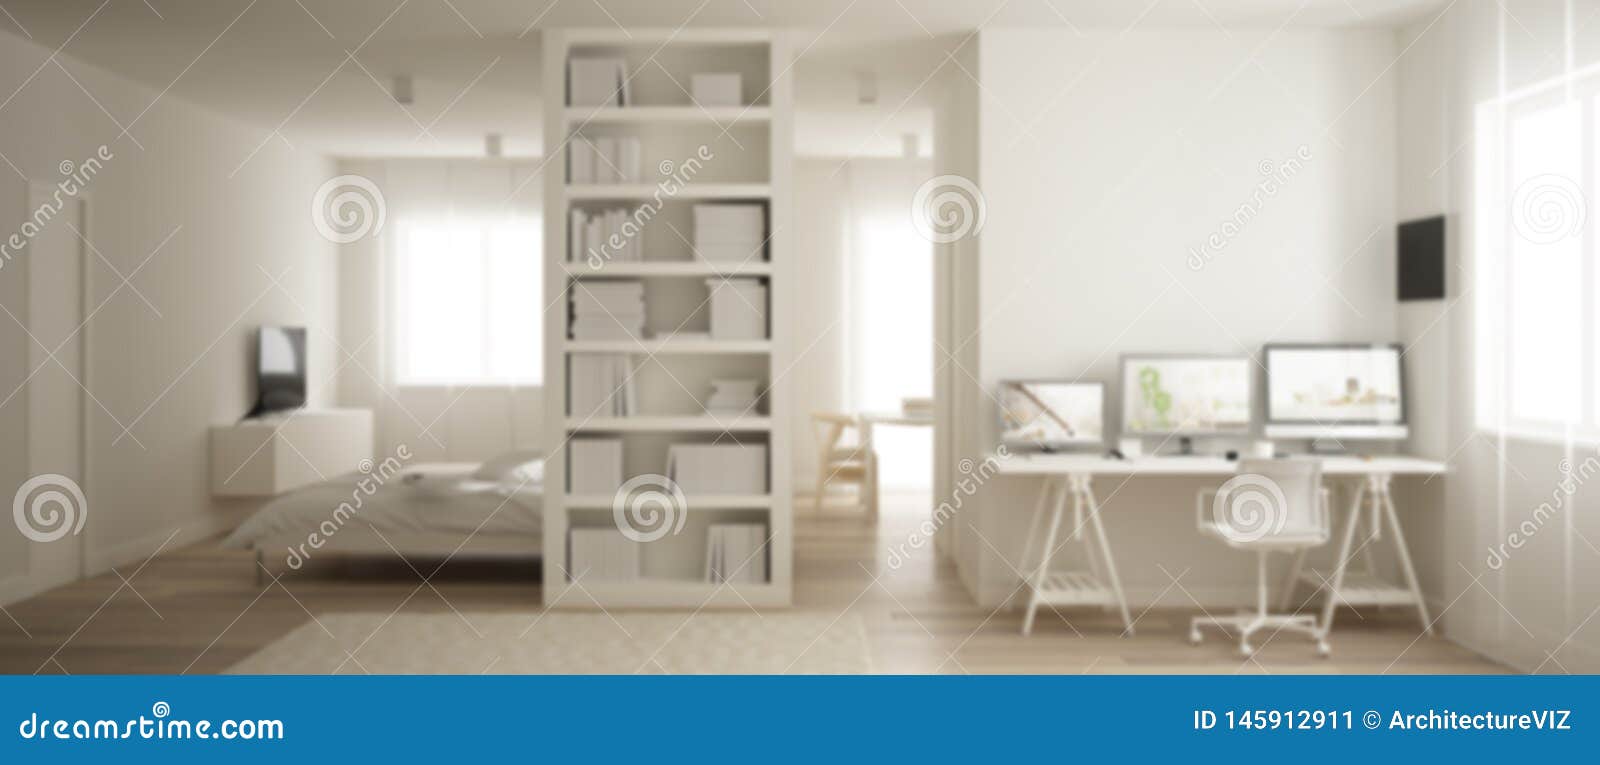 Blur Background Interior Design One Room Apartment With